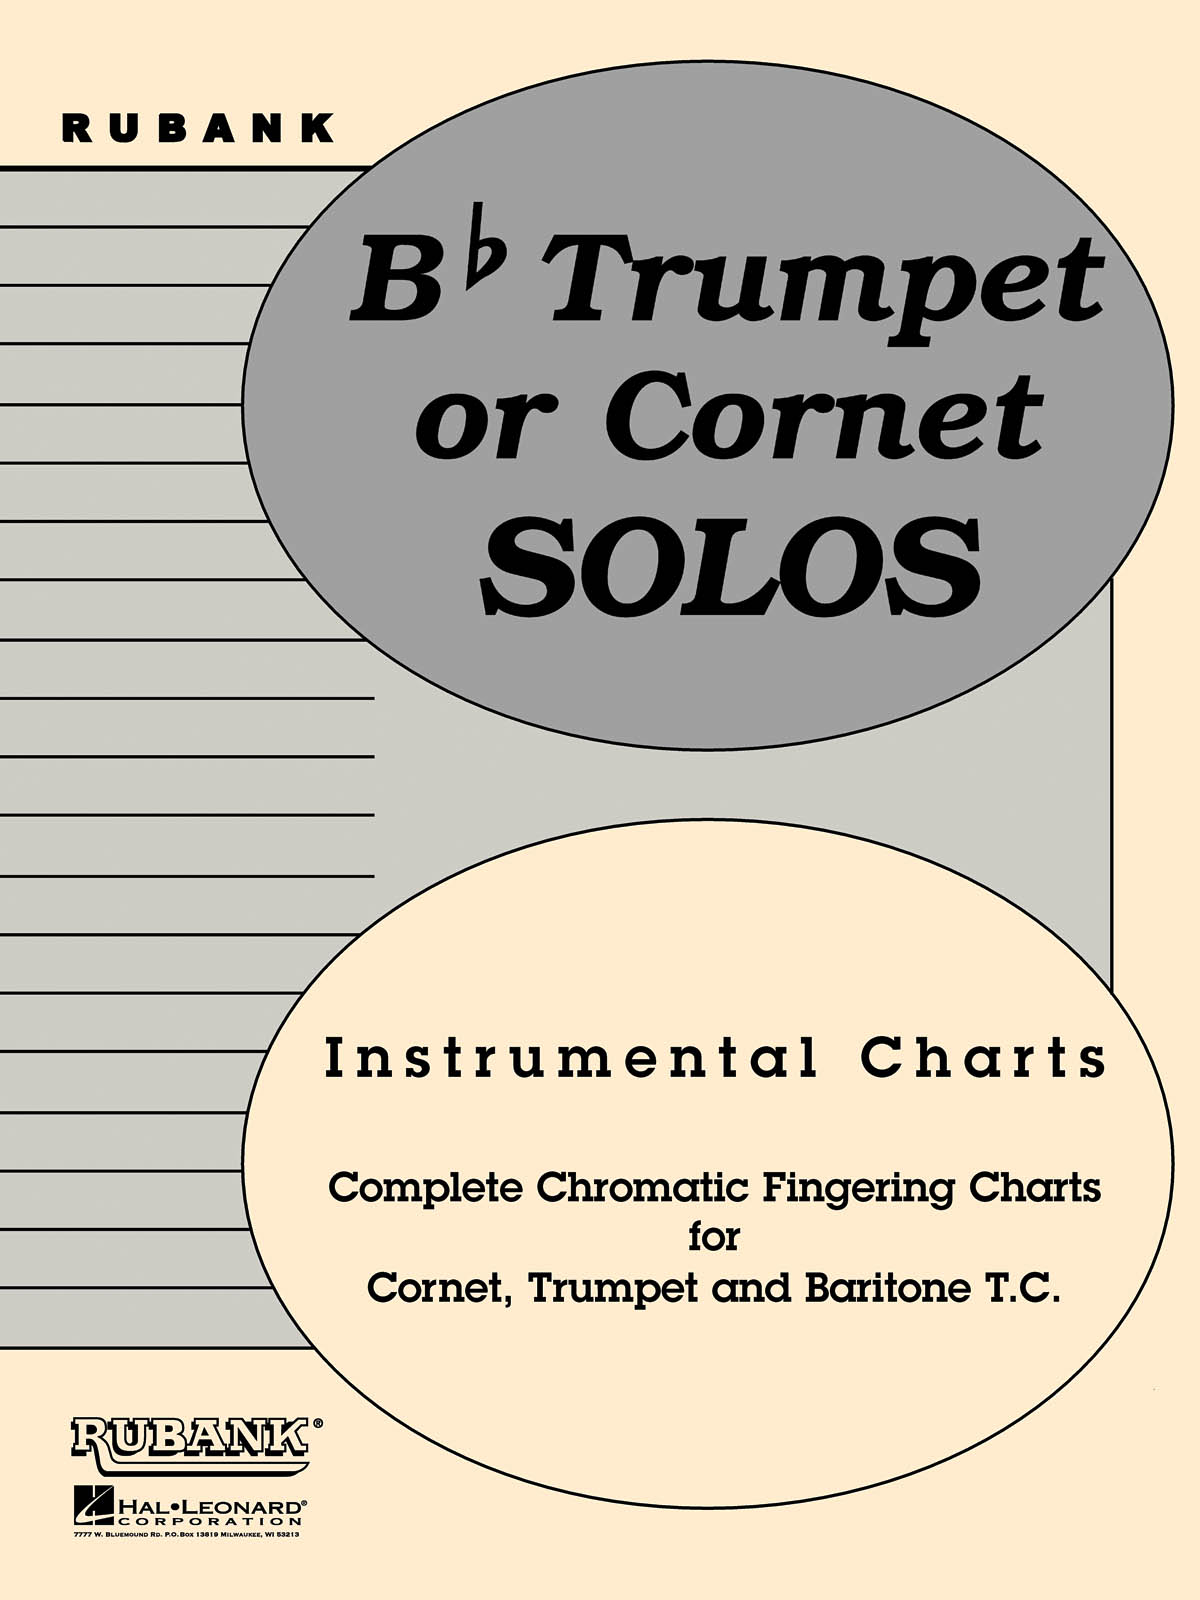 Rubank Fingering Charts – Cornet or Trumpet